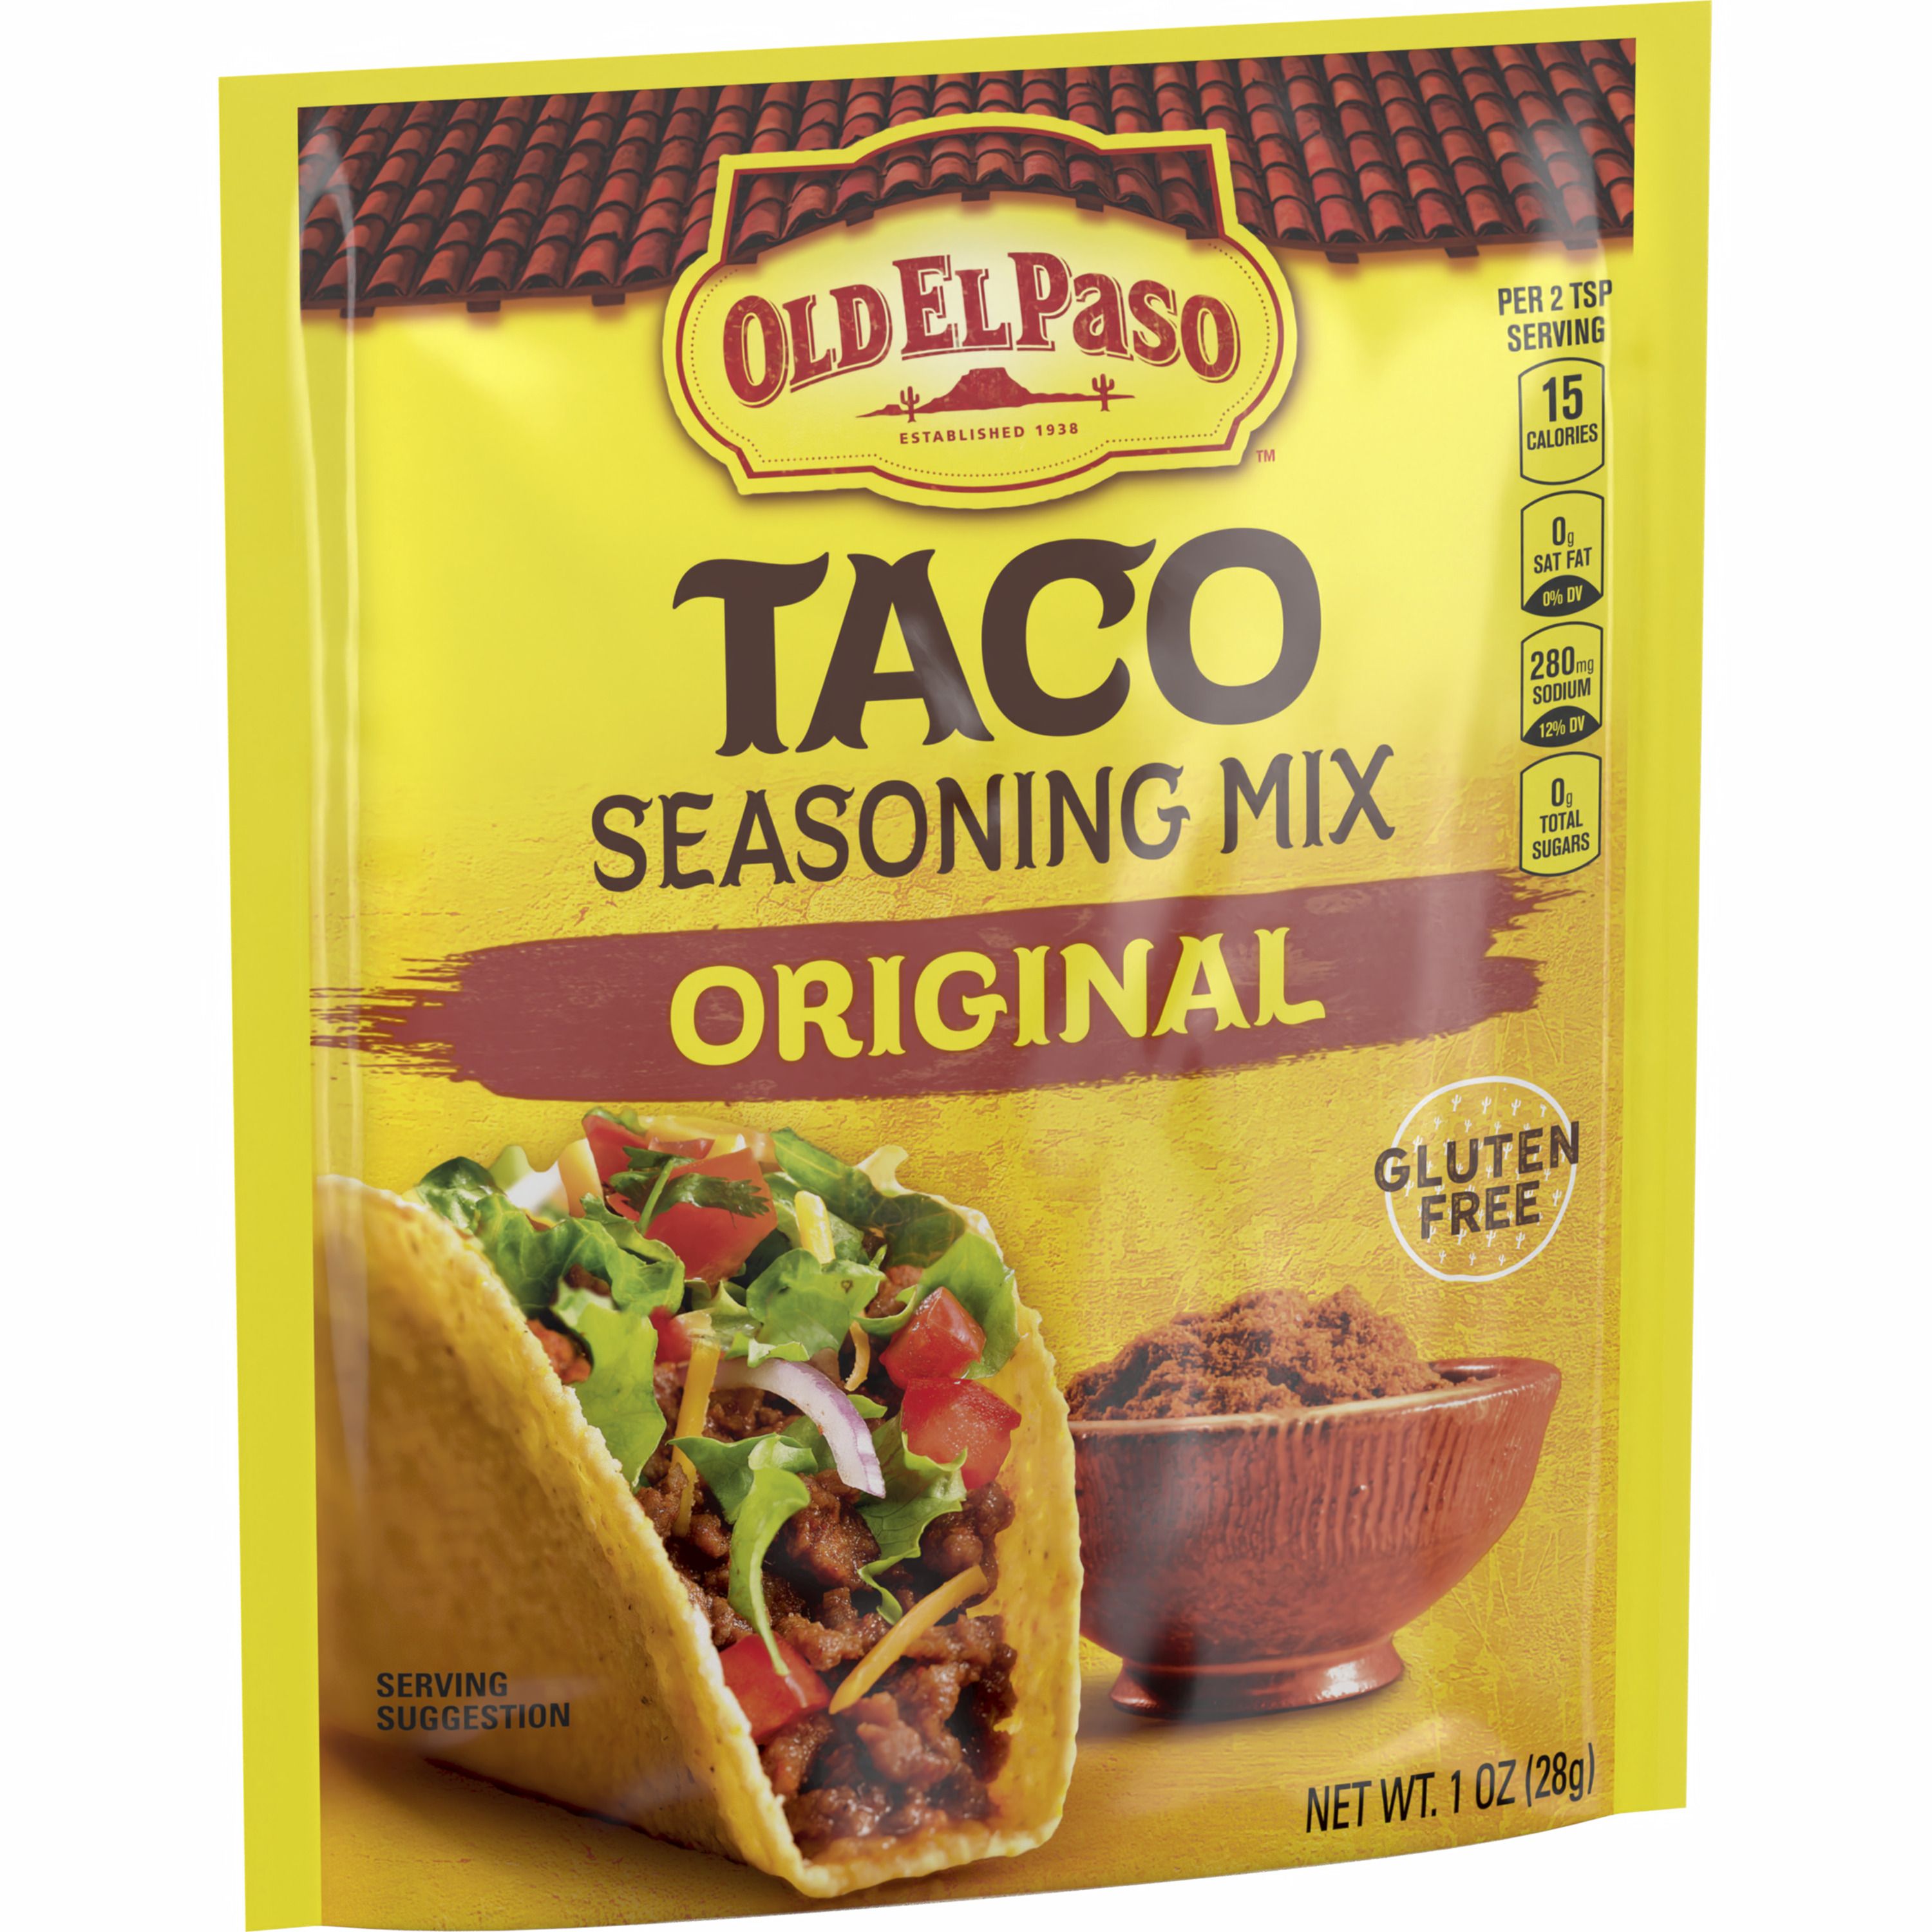 Original Taco Seasoning Mix - Mexican Dishes - Old El Paso